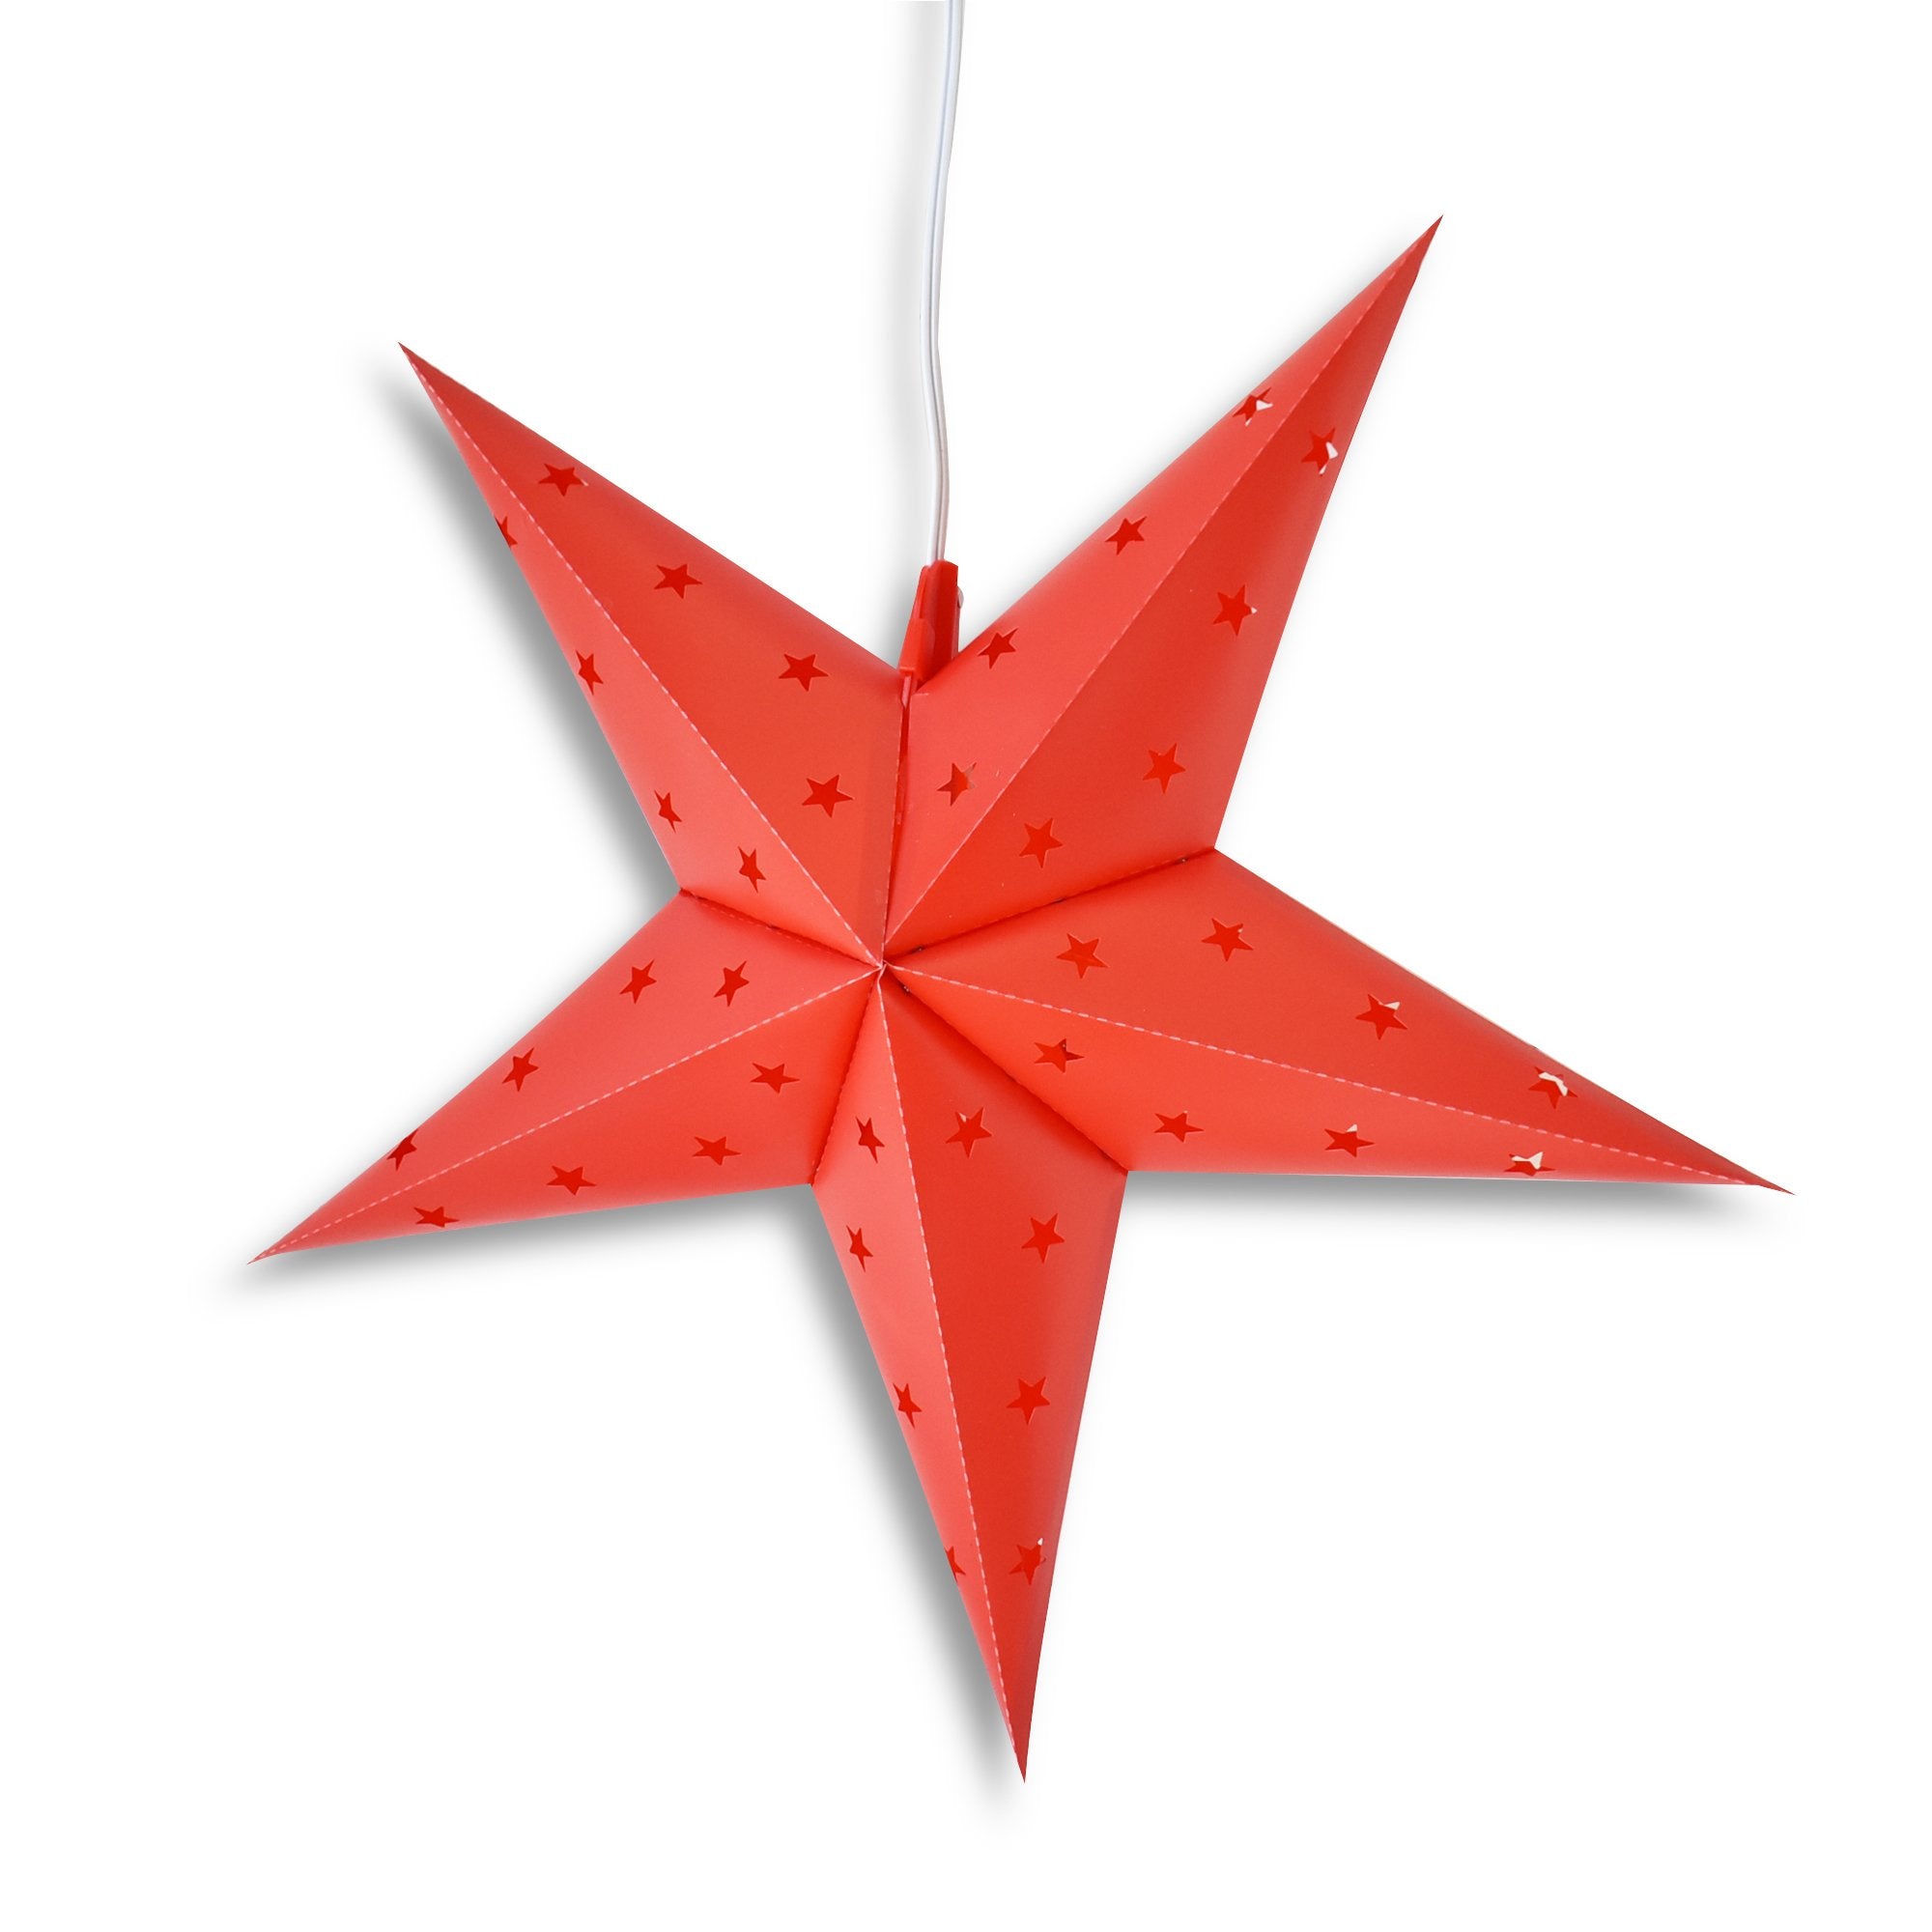 30" Red Weatherproof Star Lantern Lamp, Hanging Decoration (Shade Only)